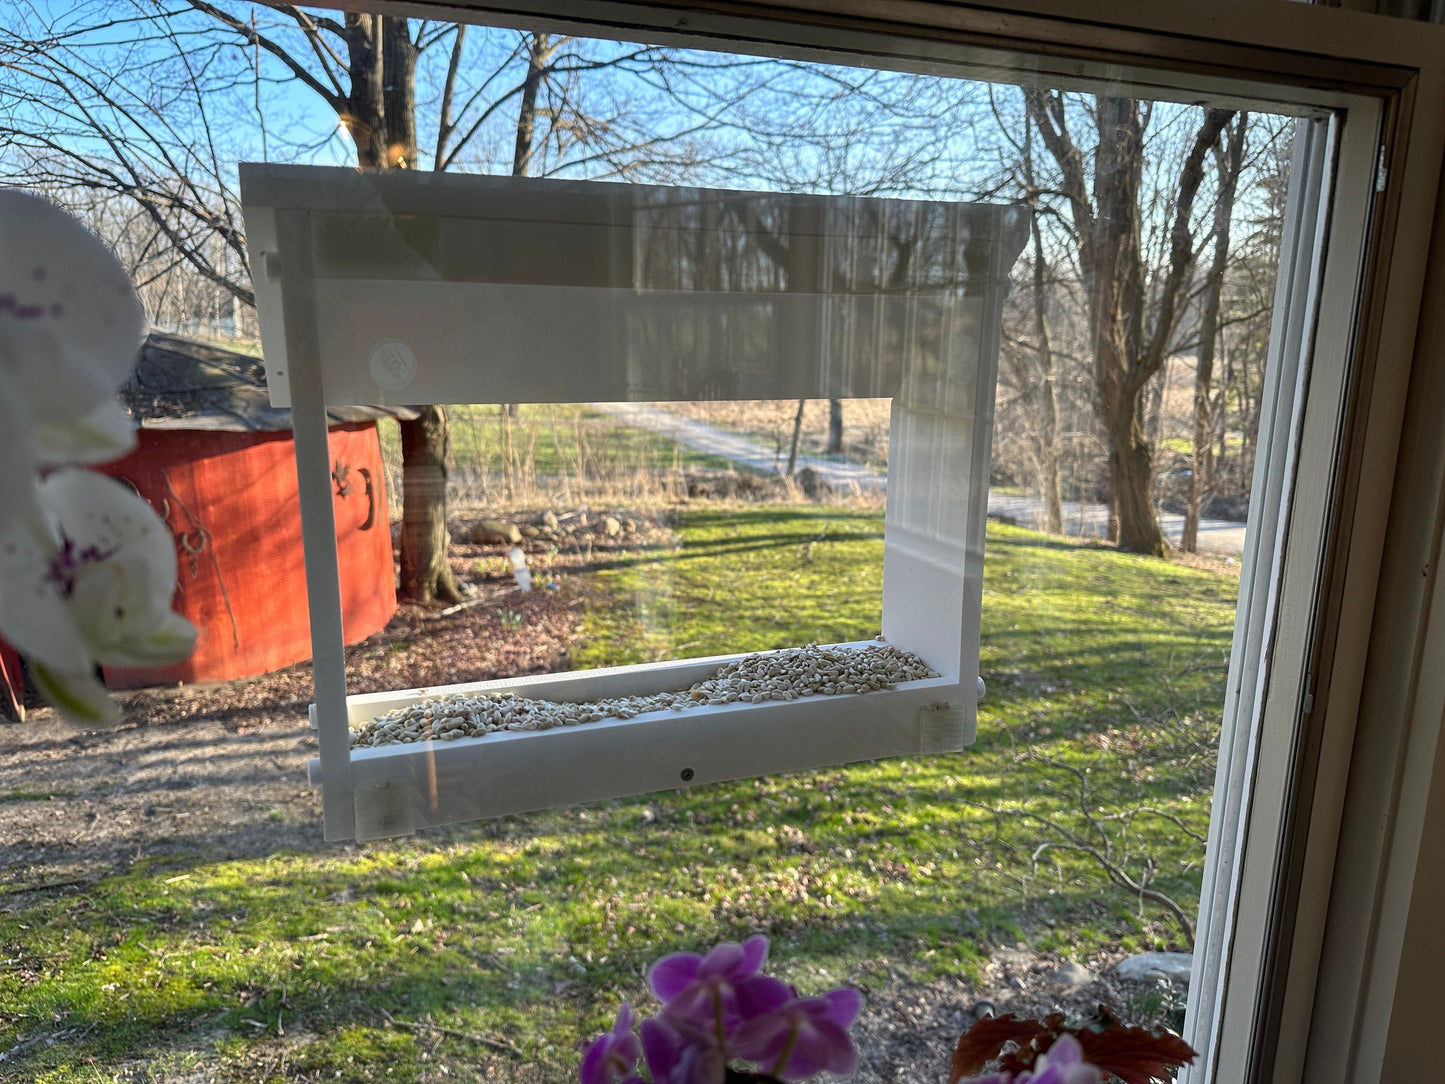 Cardinal Memorial Window Bird Feeder Solid Building Grade PVC Lasts Years - Beautiful